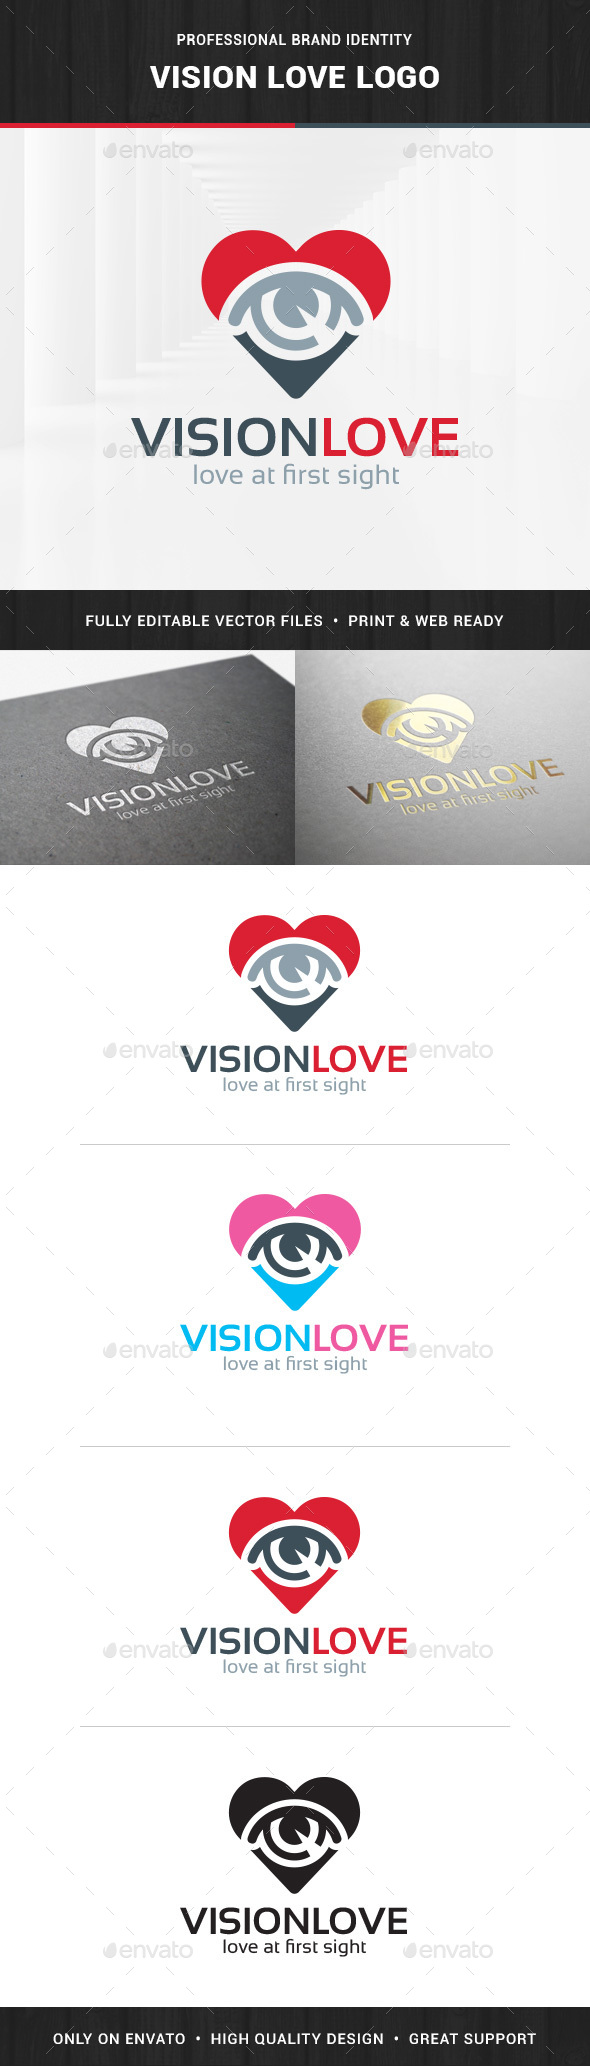 Vision Love Logo Template